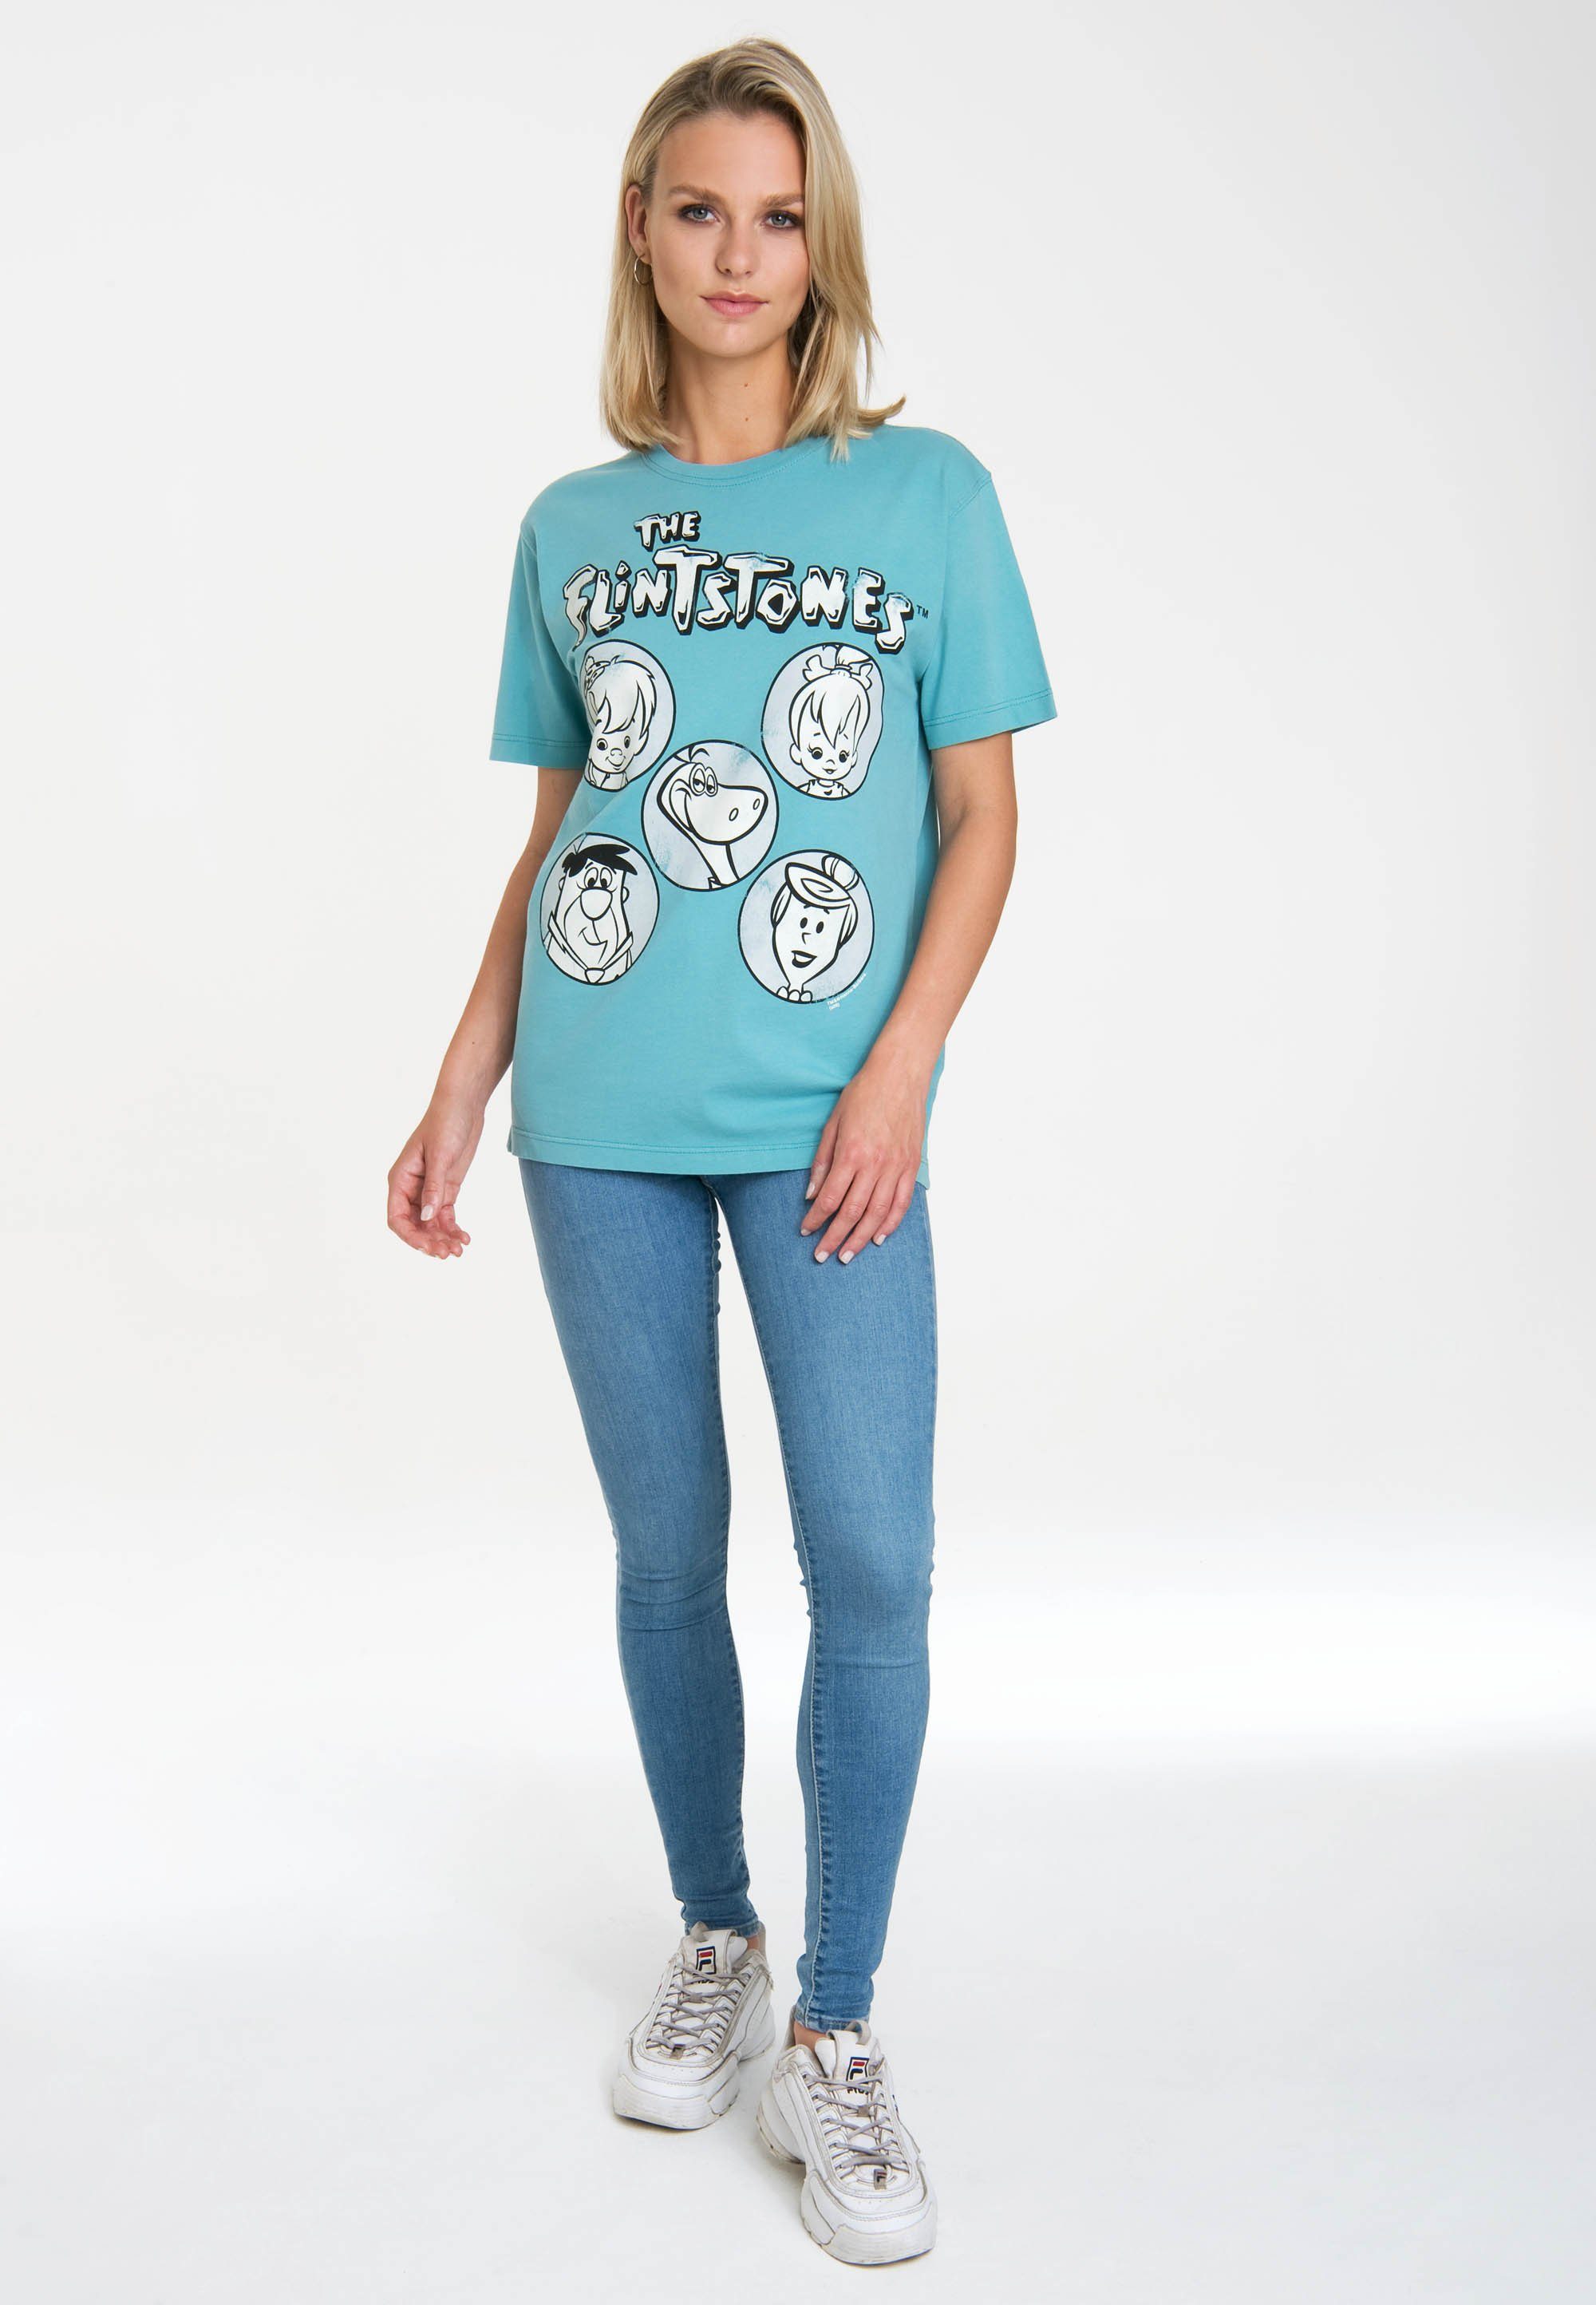 T-Shirt lizenziertem The mit LOGOSHIRT Flintstones Originaldesign